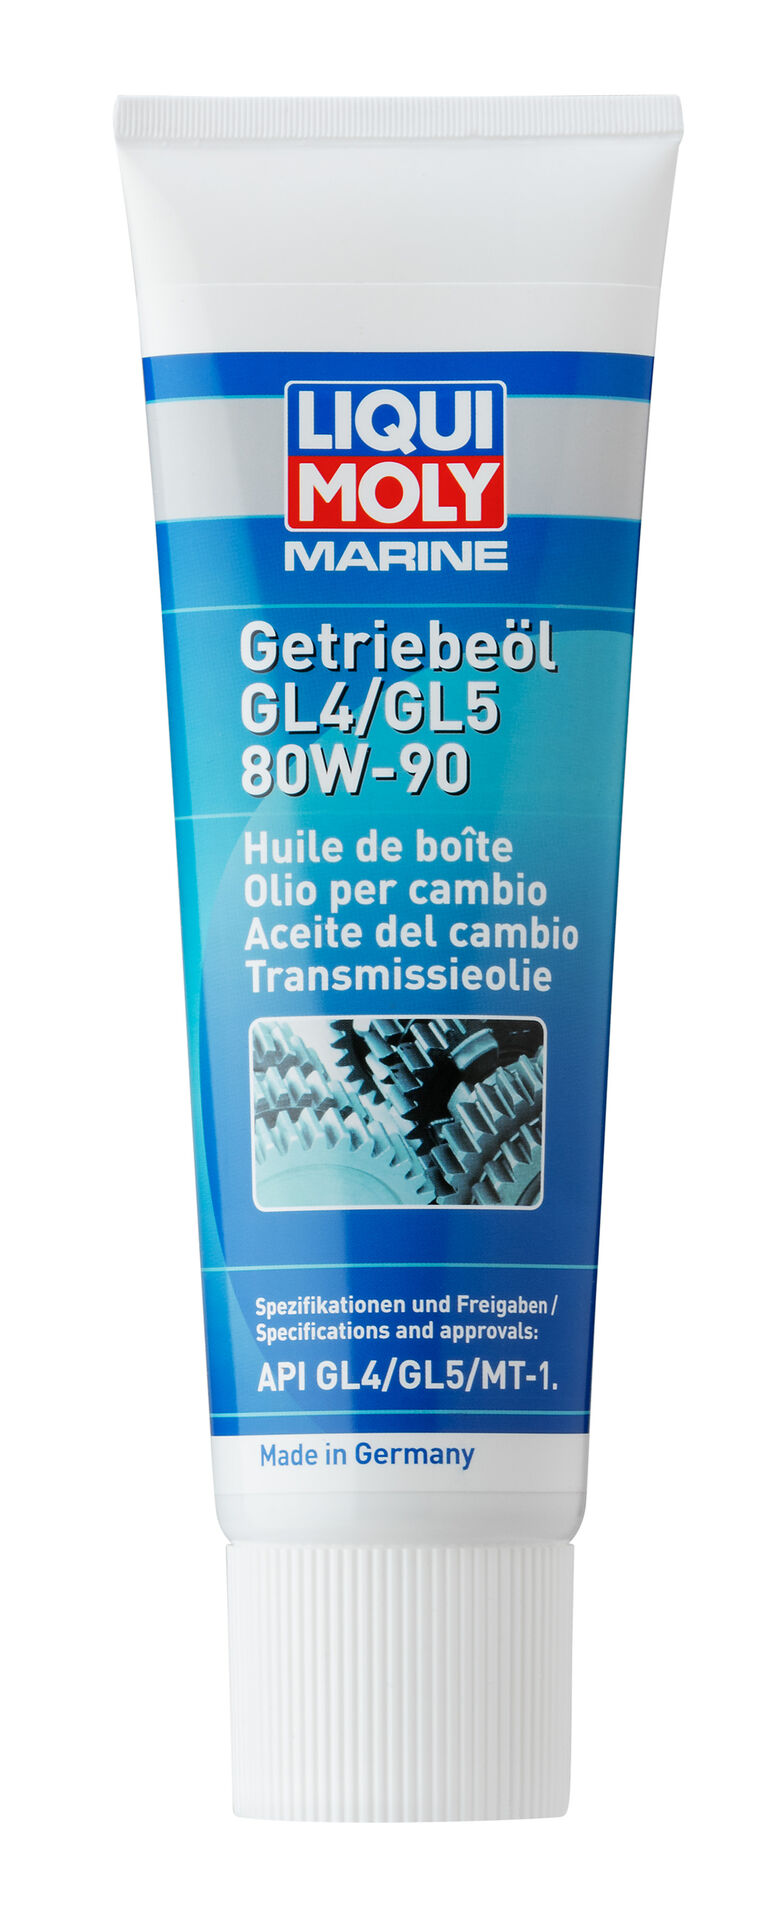 Liqui Moly 250ml Marine Getriebeöl API GL4/GL5/MT-1 80W-90 Boot-Getriebeöl